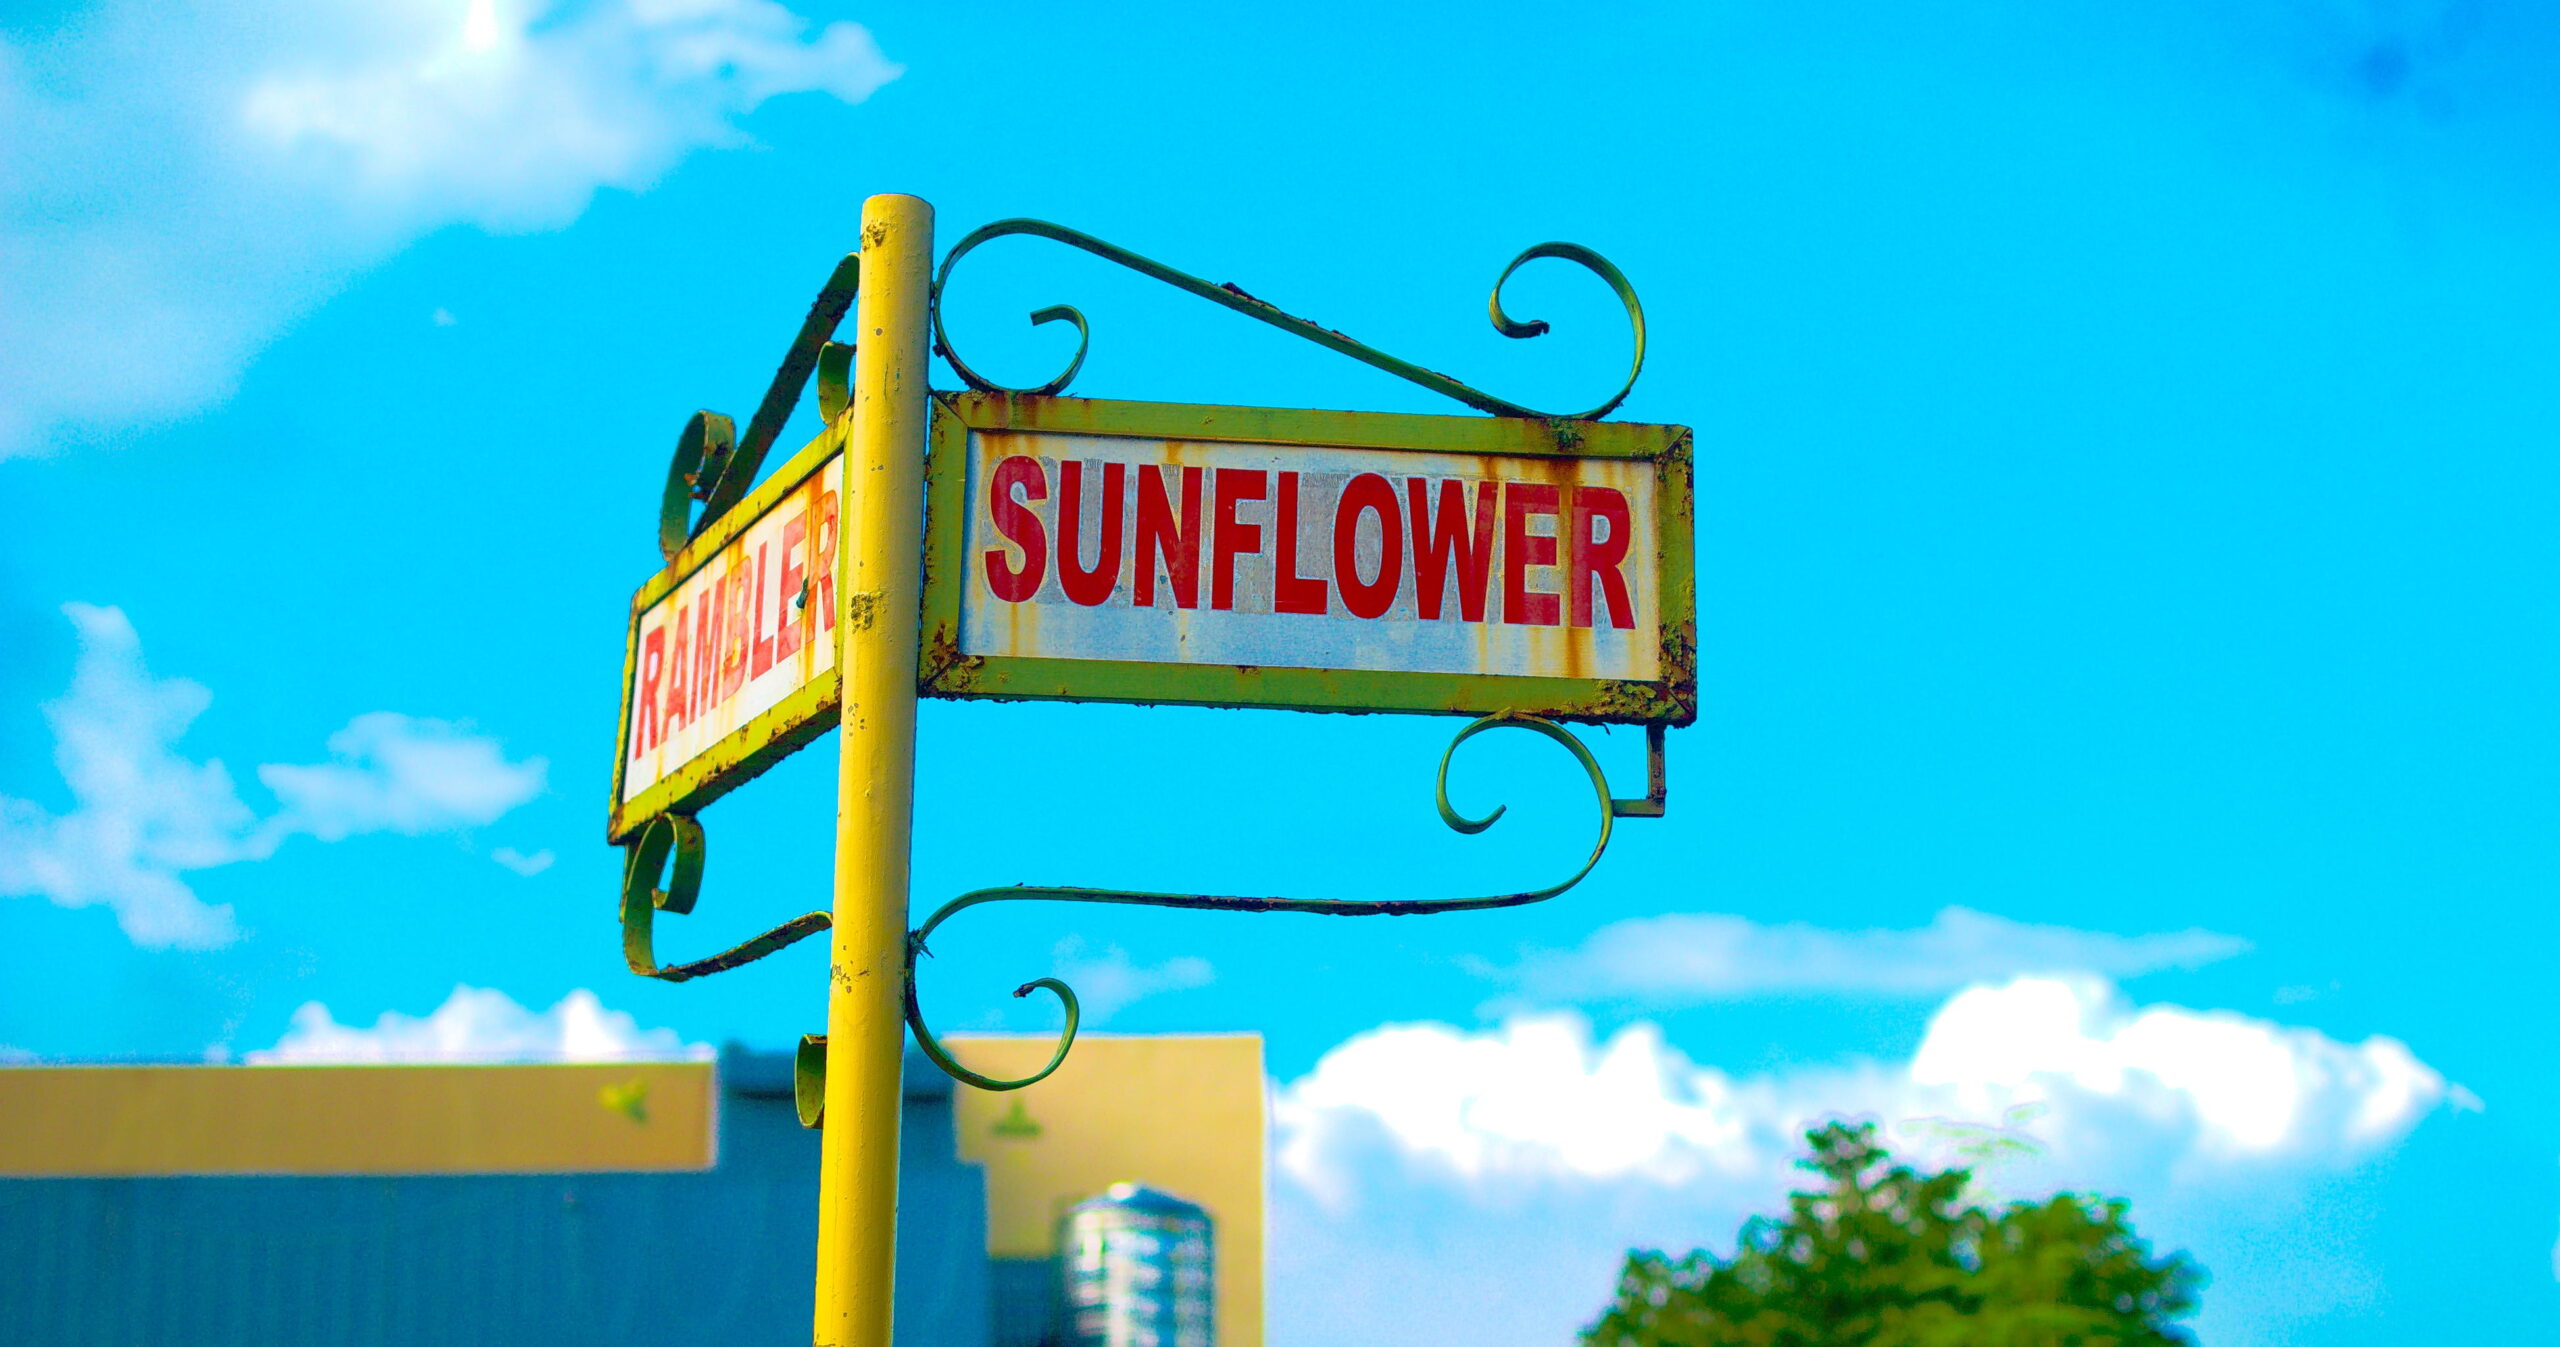 Sunflower Street Corner